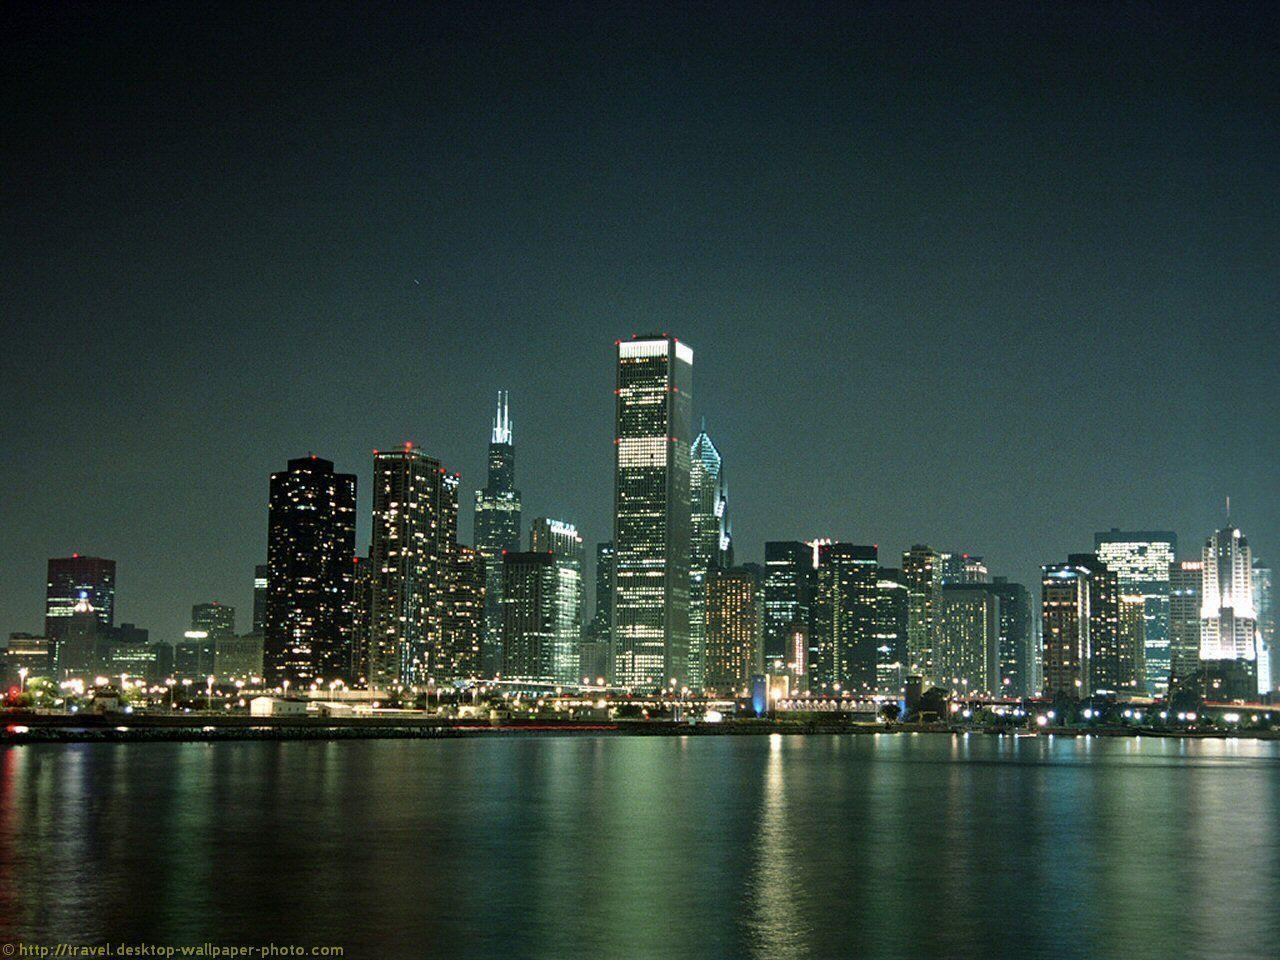 Navy Pier Chicago wallpaper background picture